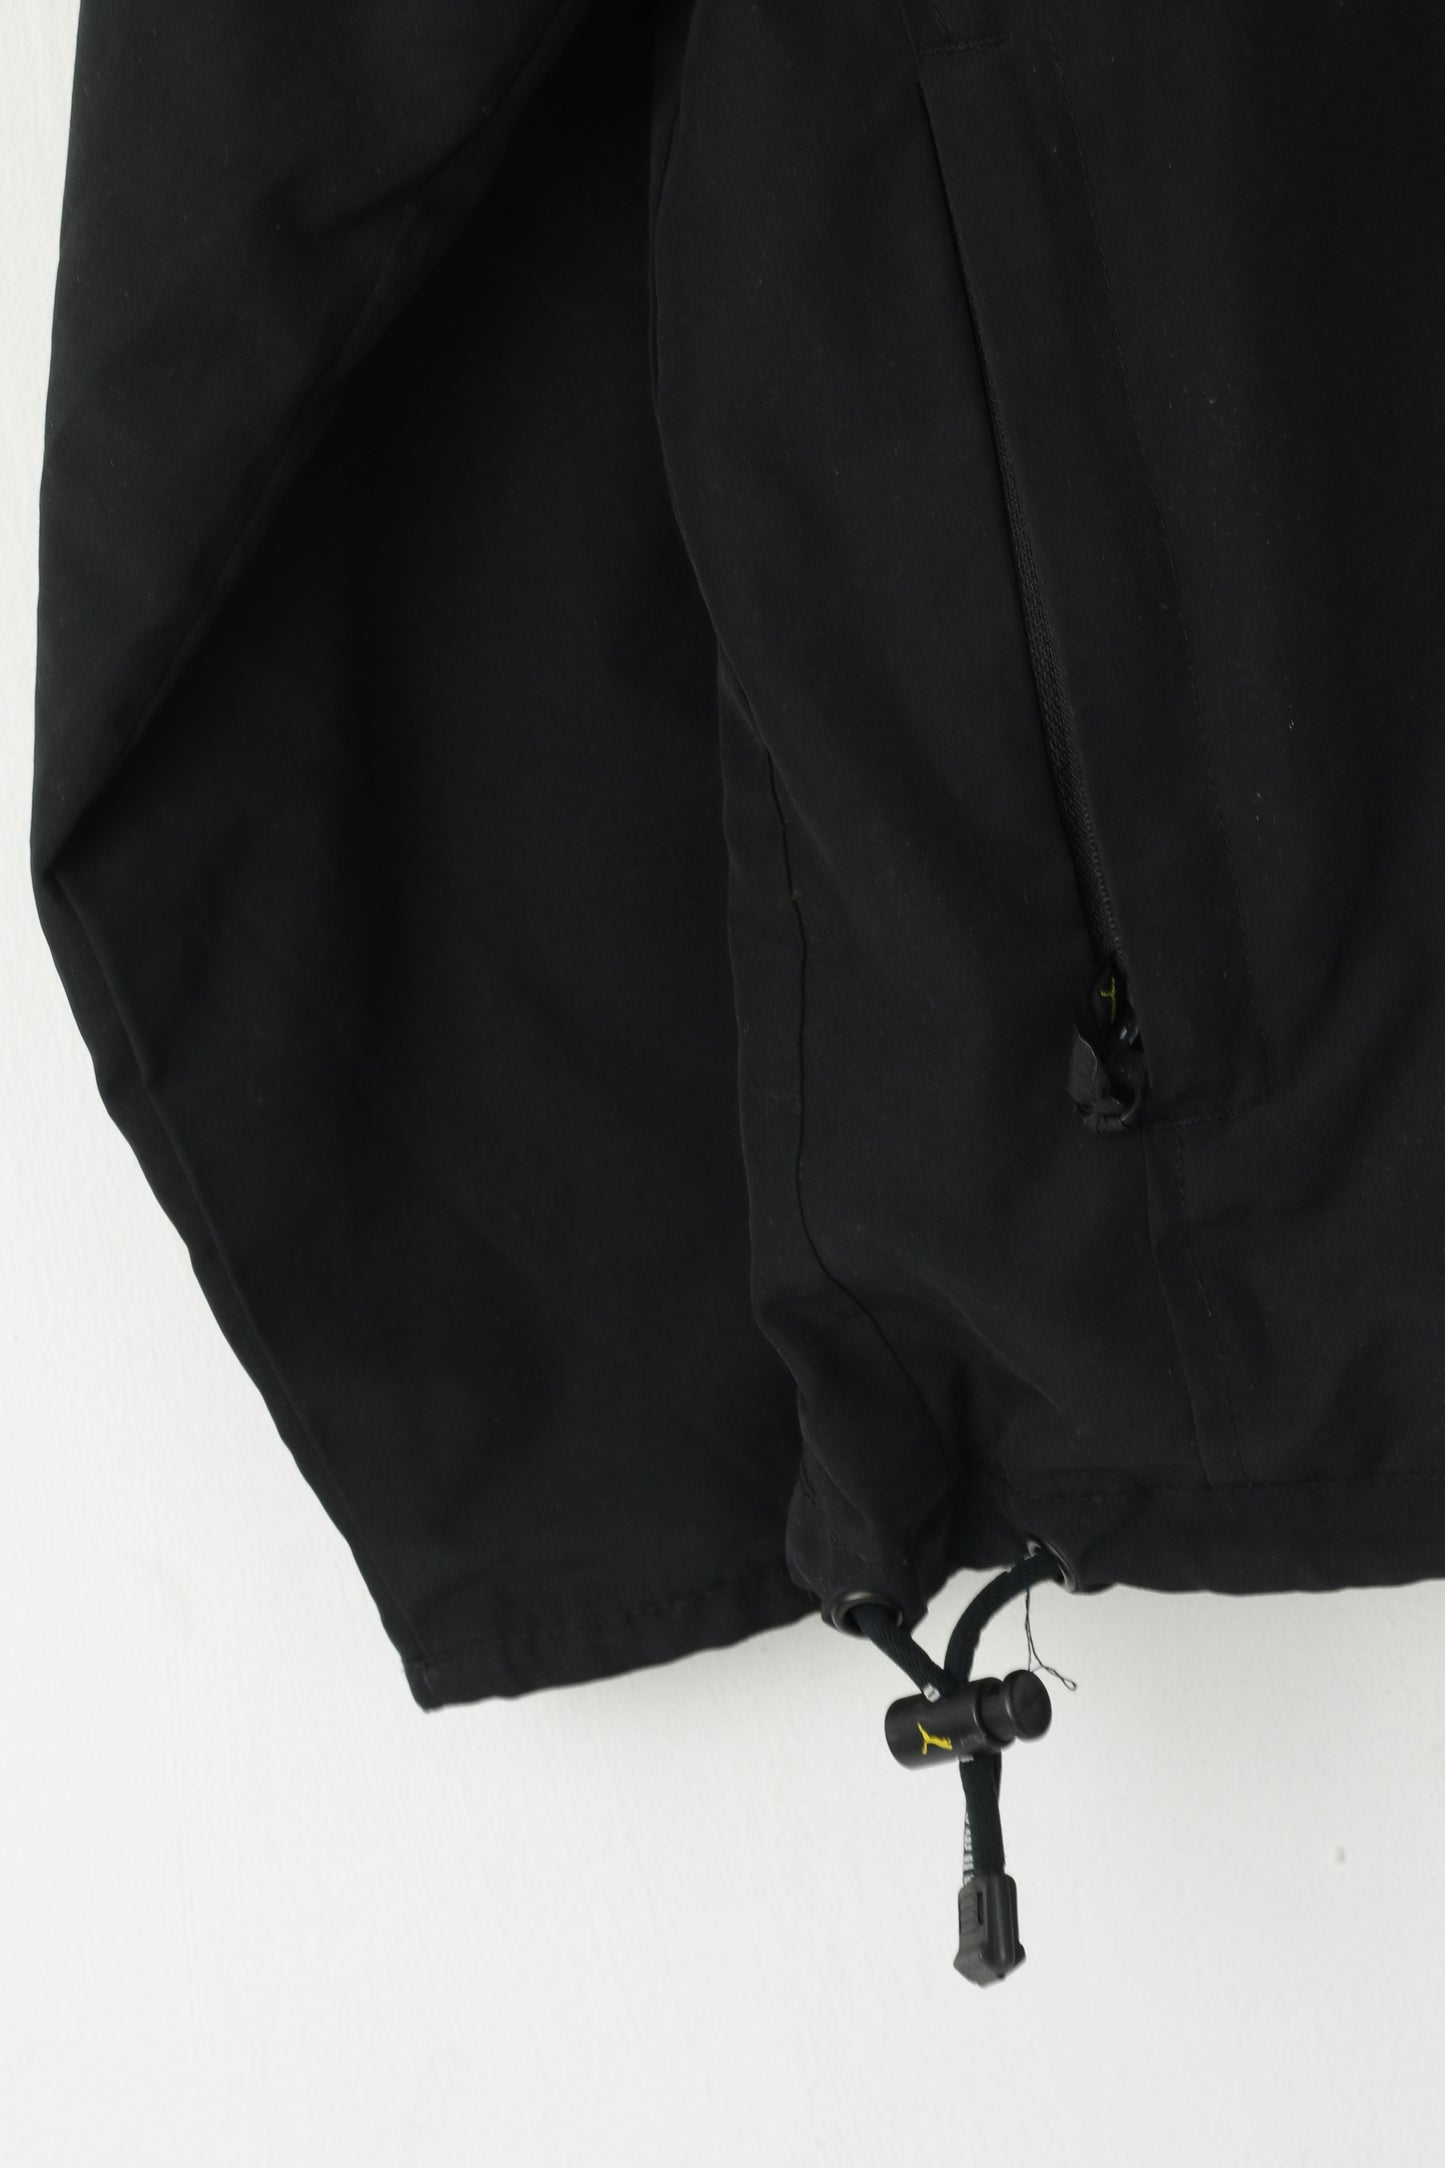 Puma Men M Jacket Black Activewear Reflective Lightweight Full Zipper Retro Sport Top